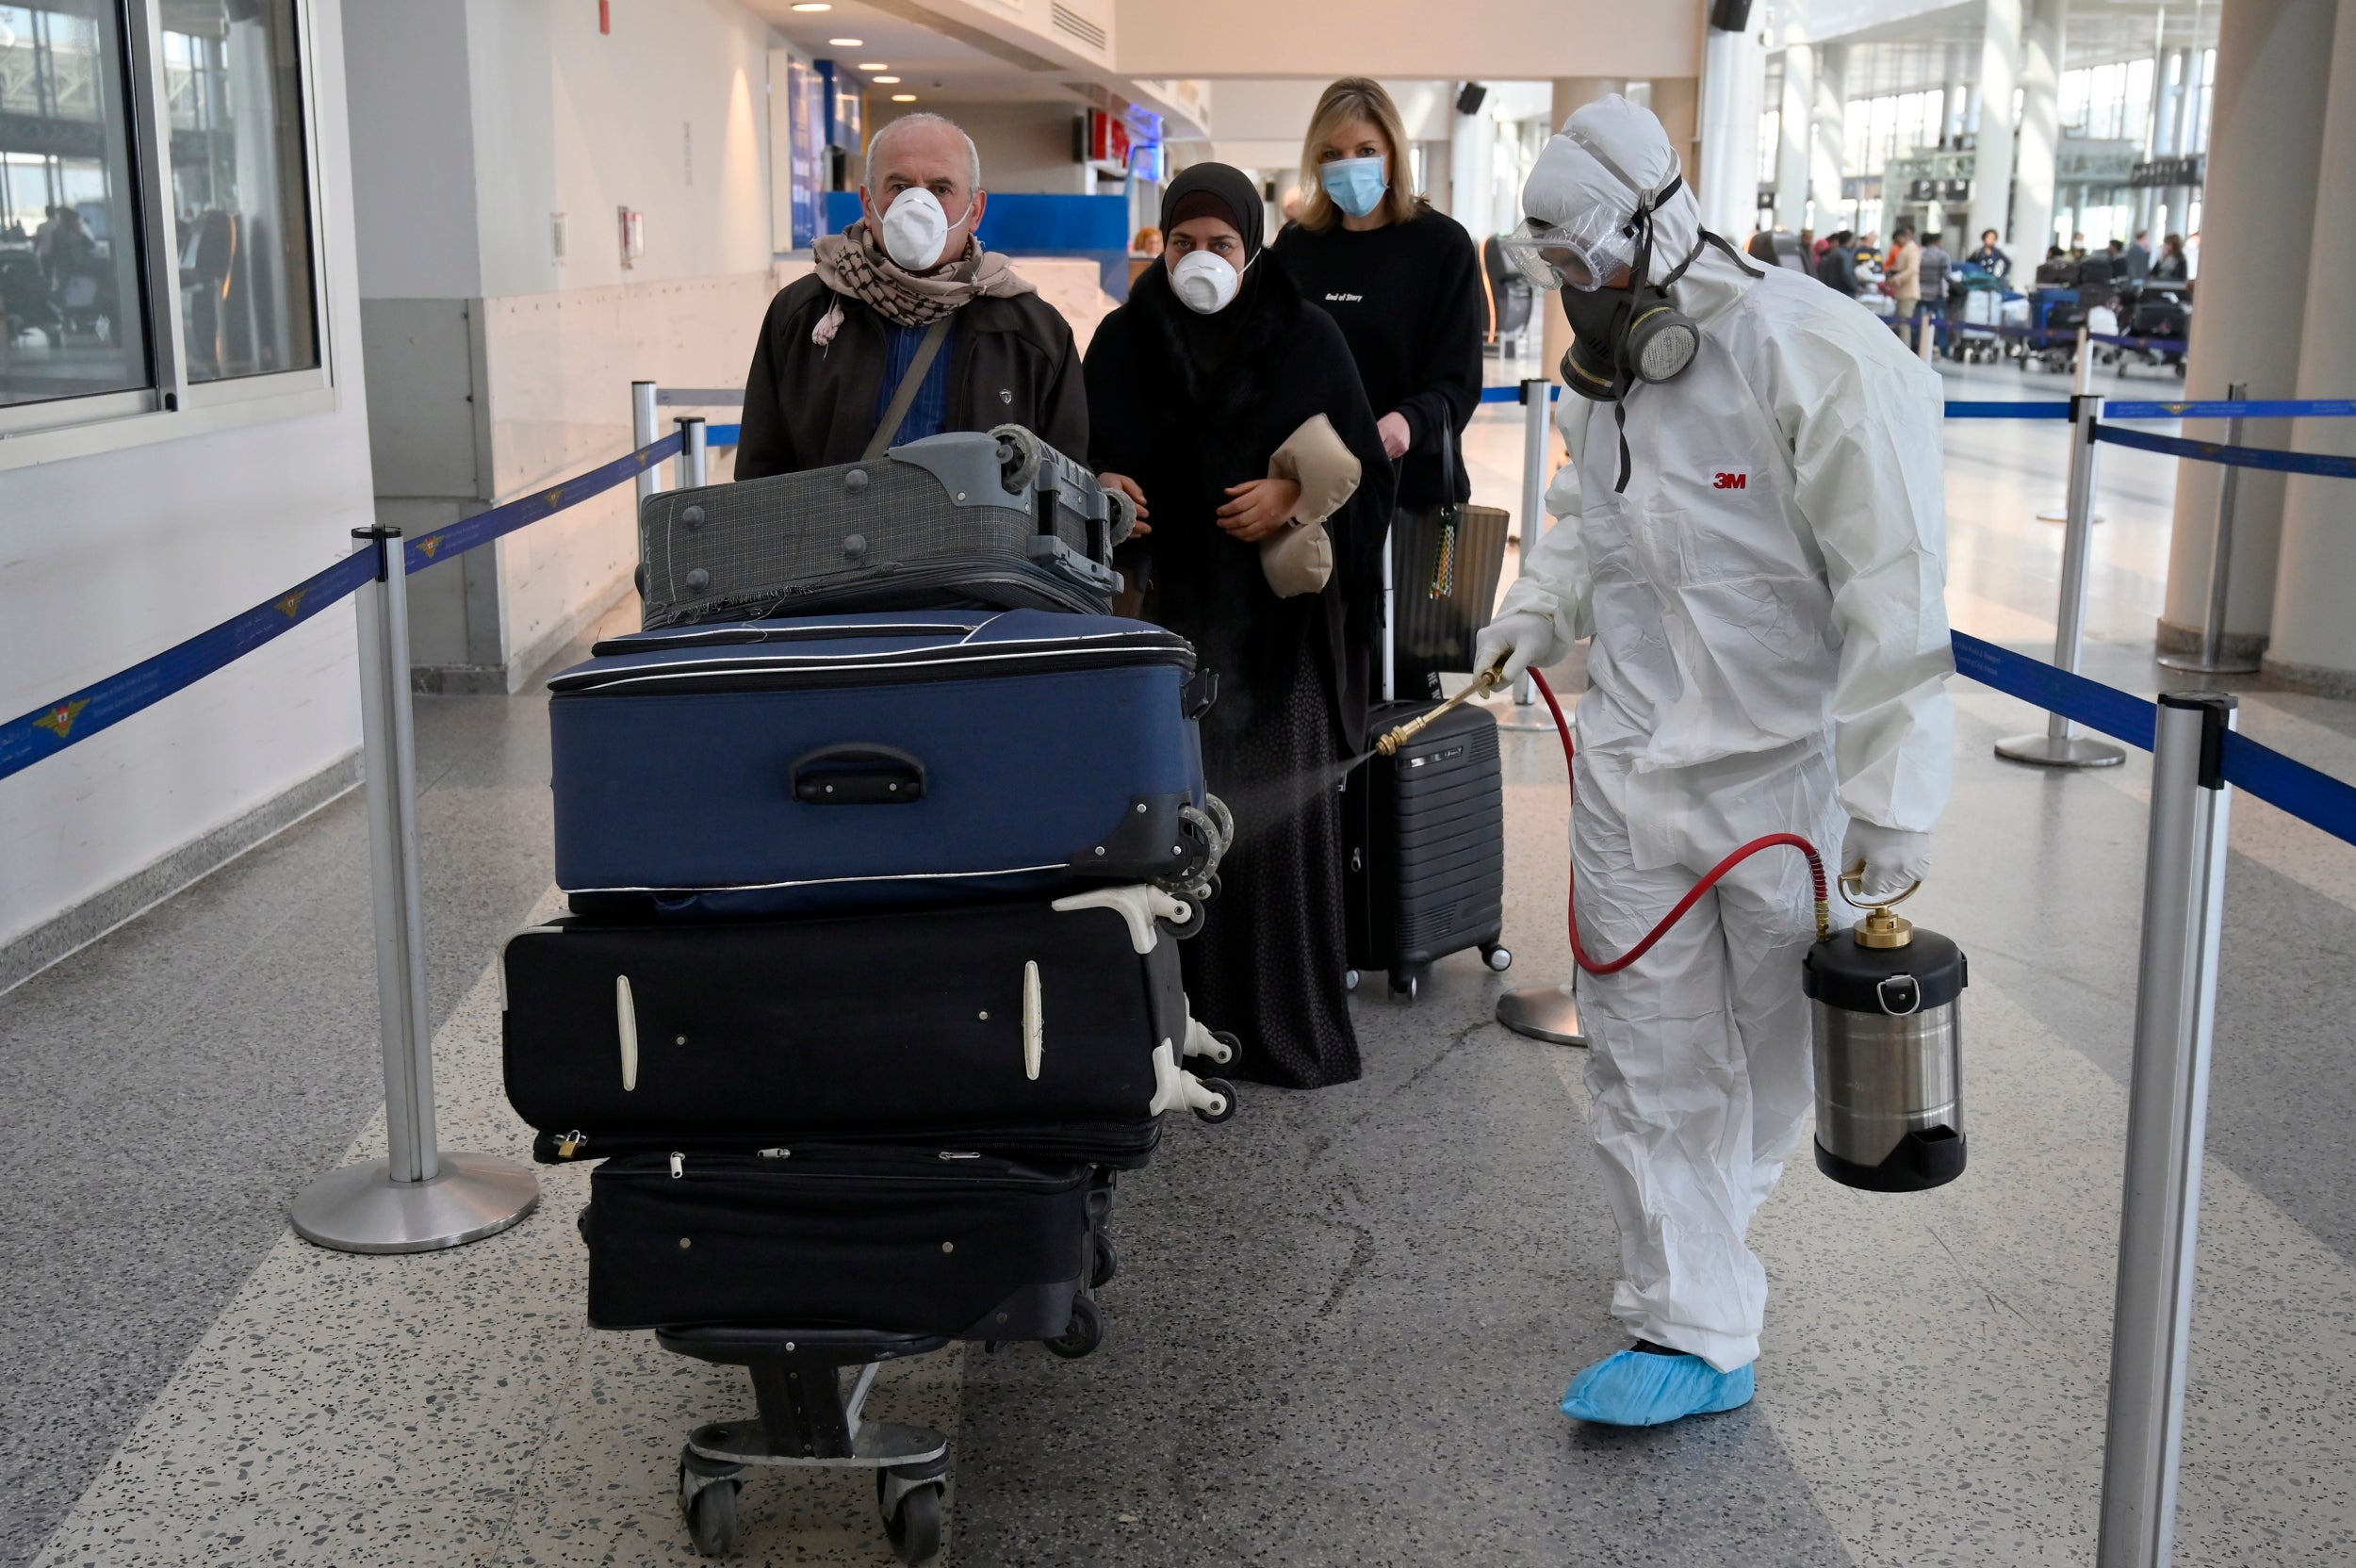 A worker sprays disinfectant as a precaution against the spread of coronavirus at Rafik Hariri international airport in Beirut